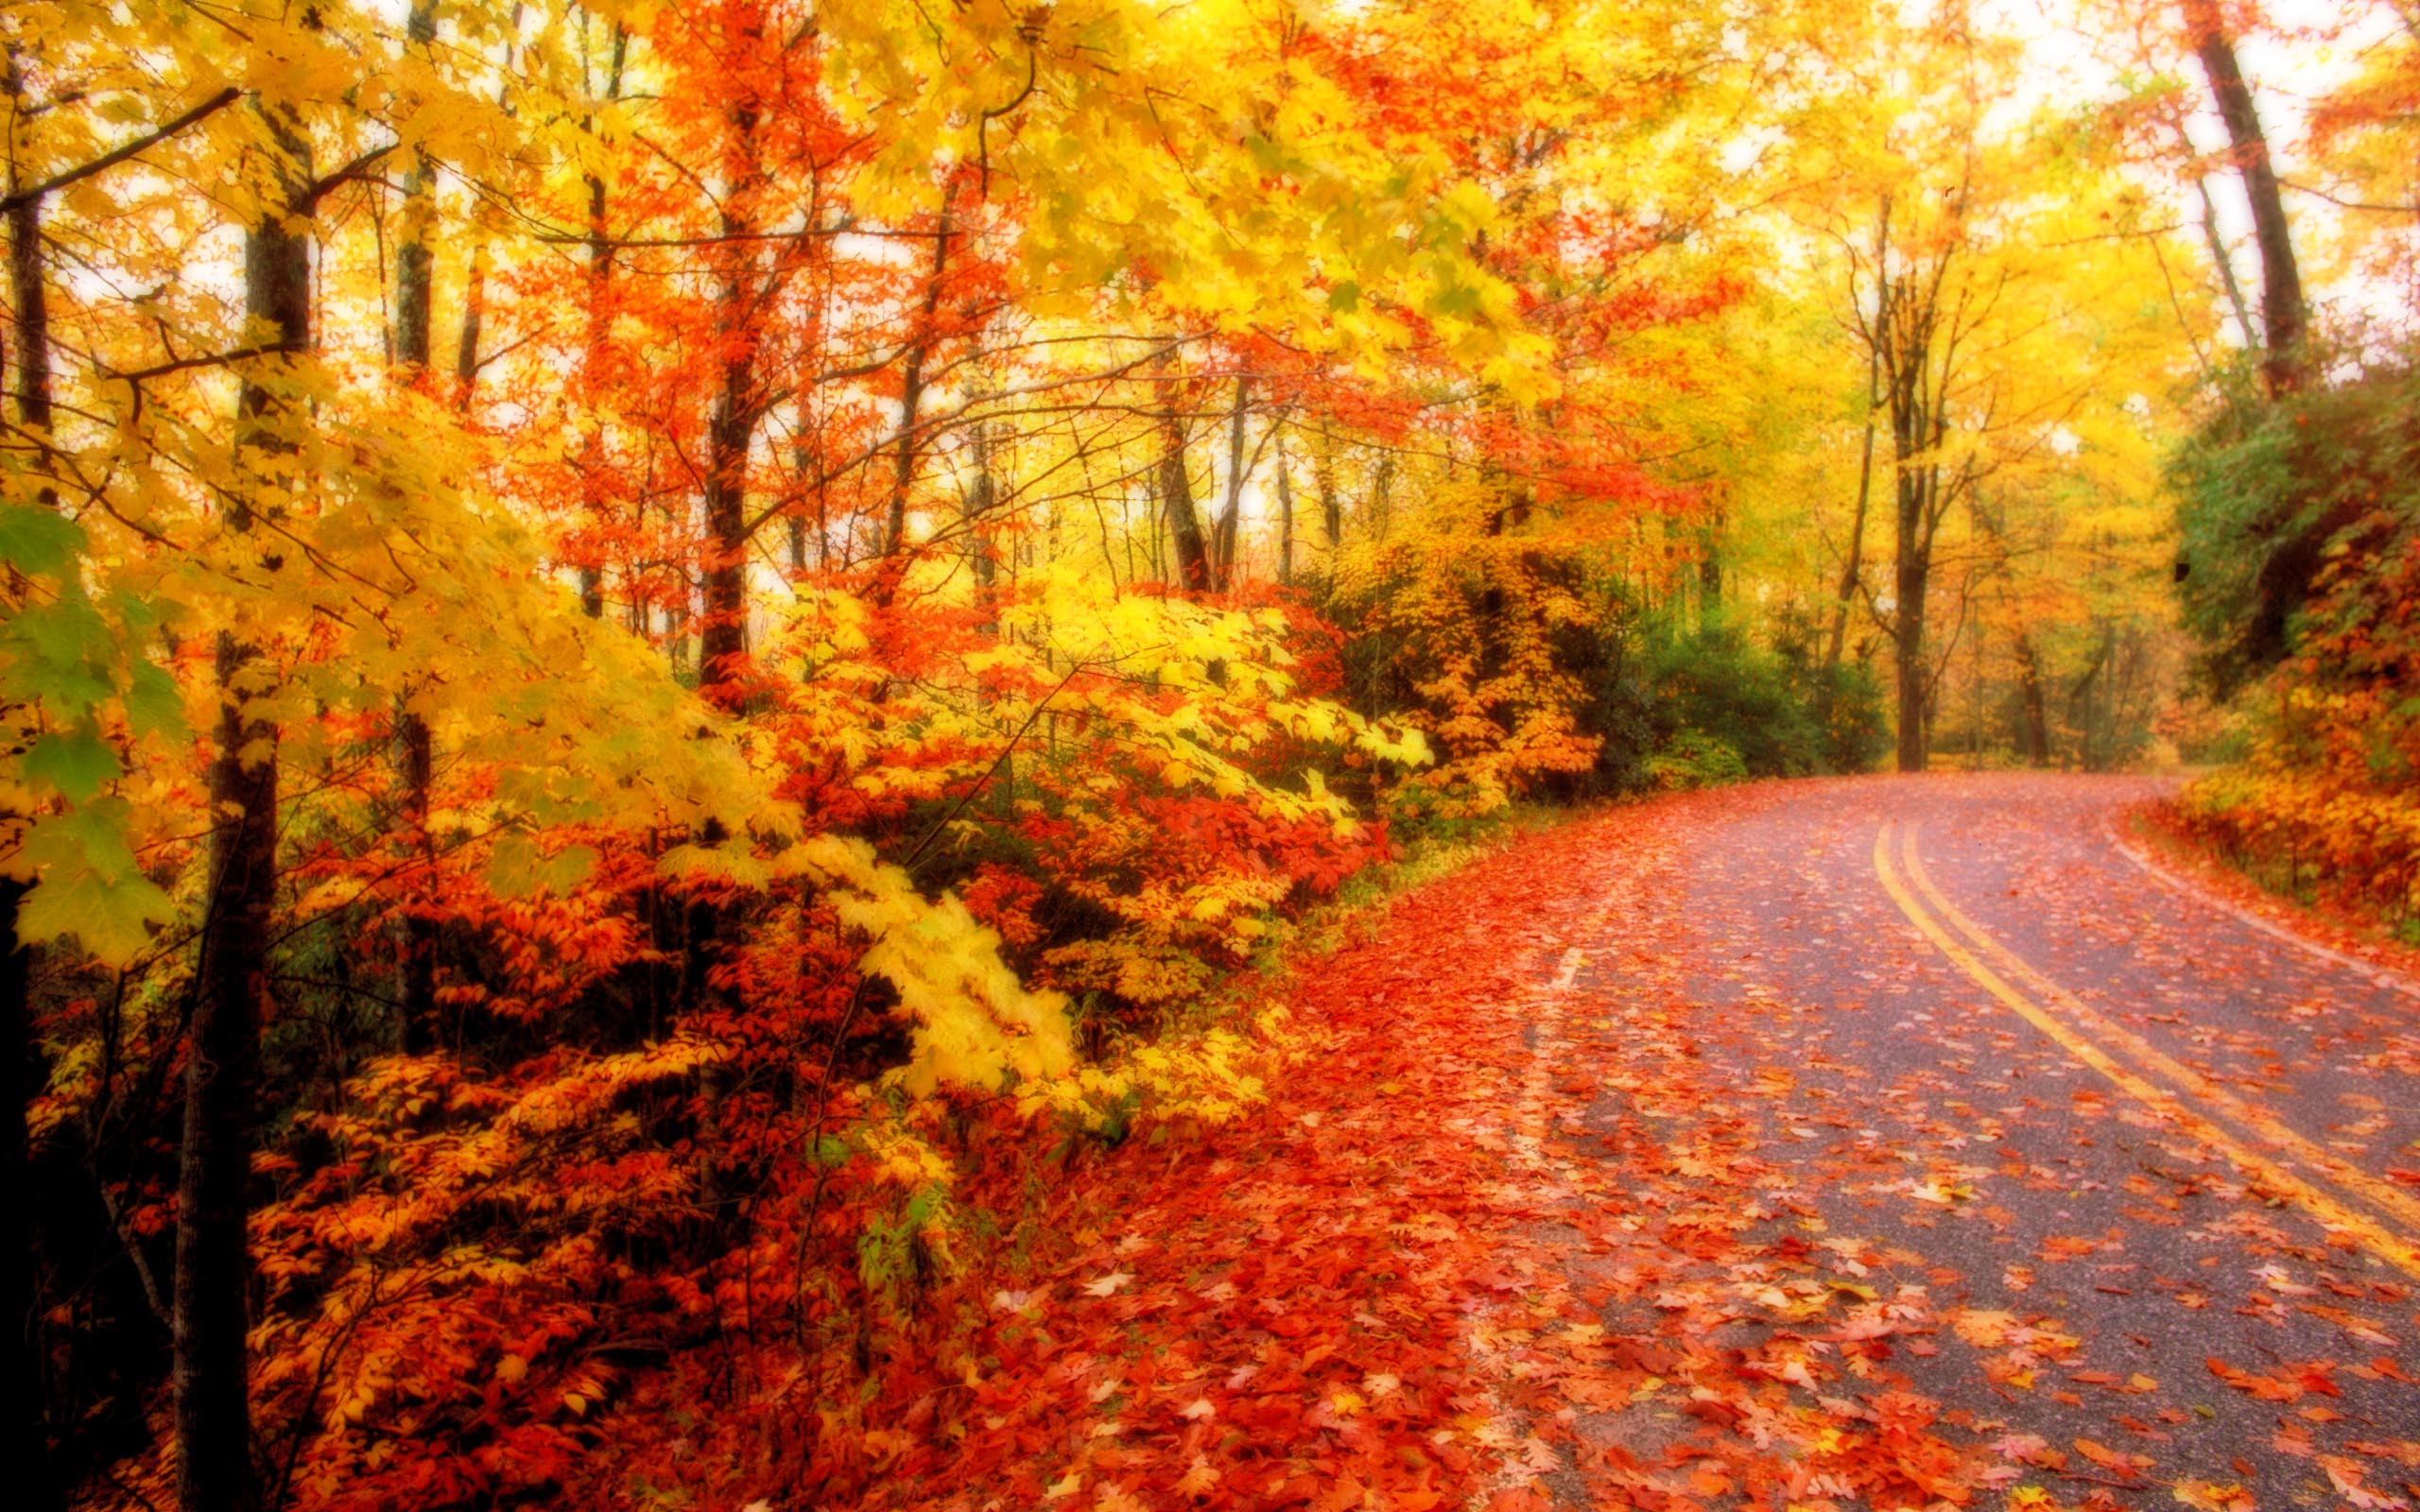 Fall leaf background